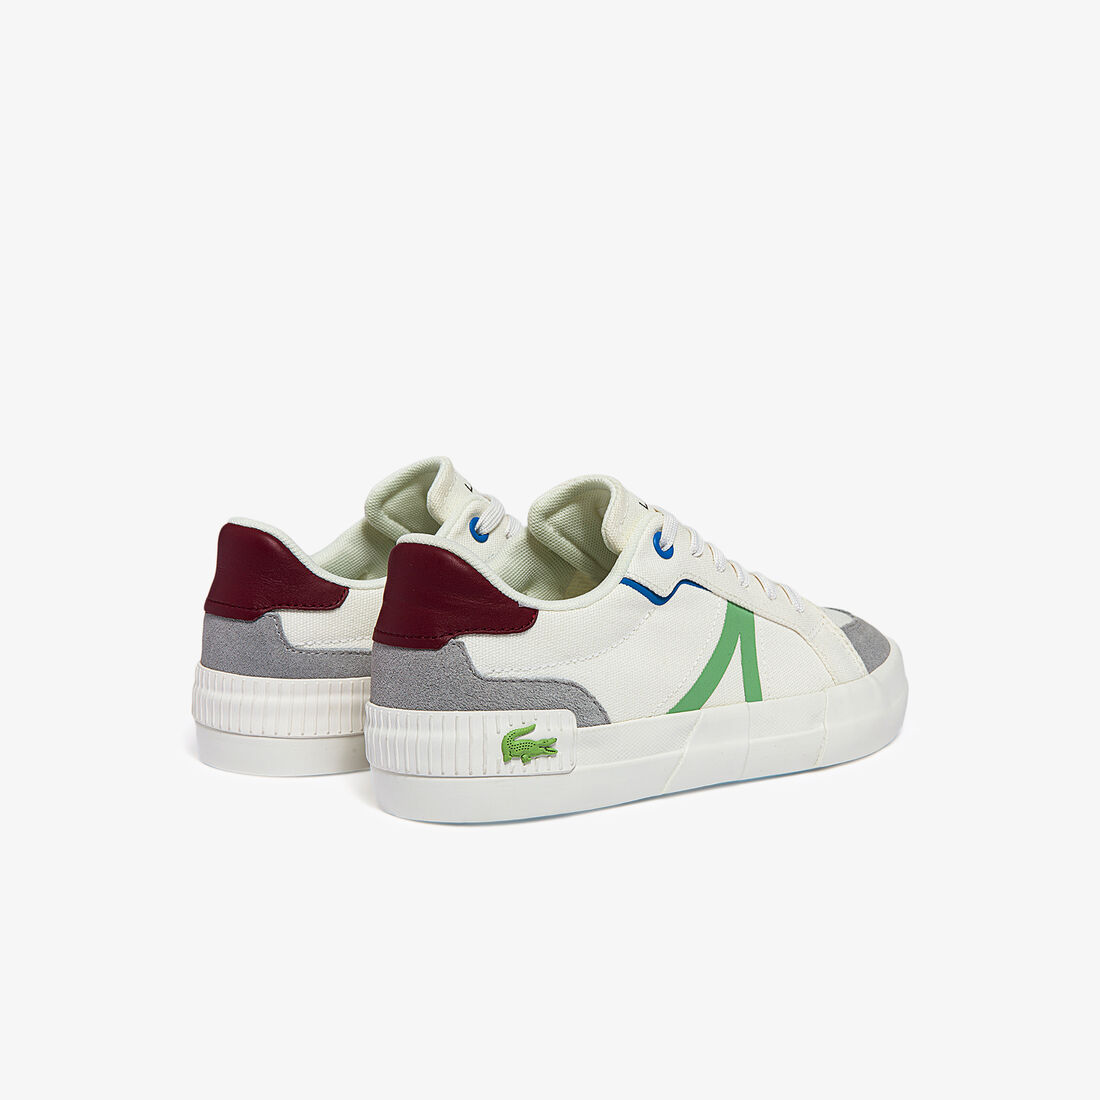 Lacoste L4 Canvas Sneakers Damen Weiß Hellgrün | LEFX-65127